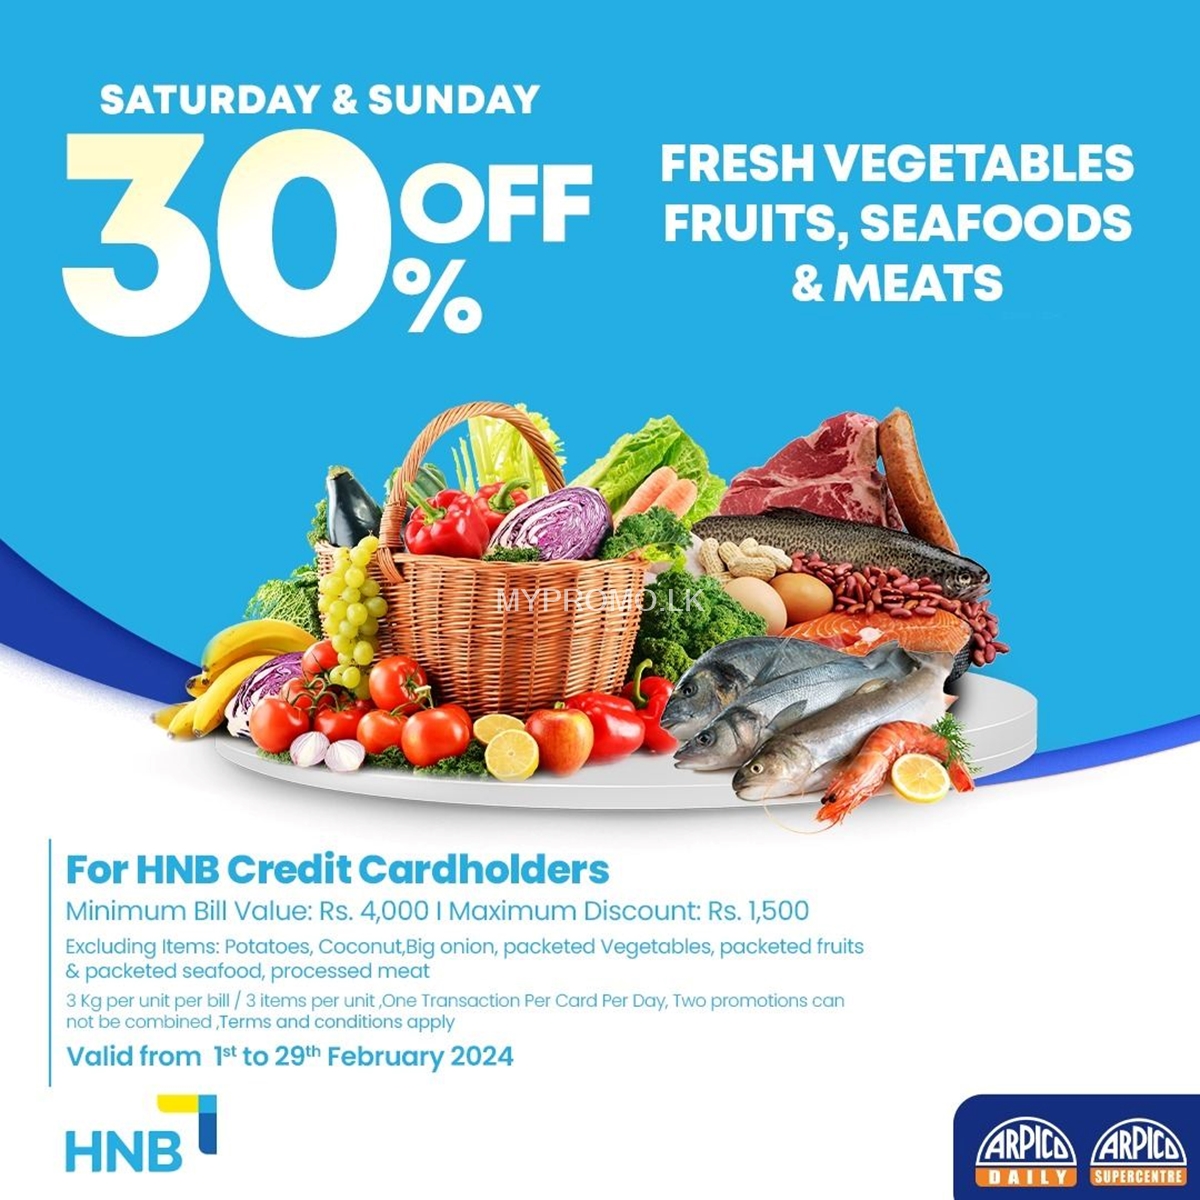 30% Off on Fresh Vegetables, Fruits, Seafoods & Meats at Arpico Super Centre for HNB Credit Cards